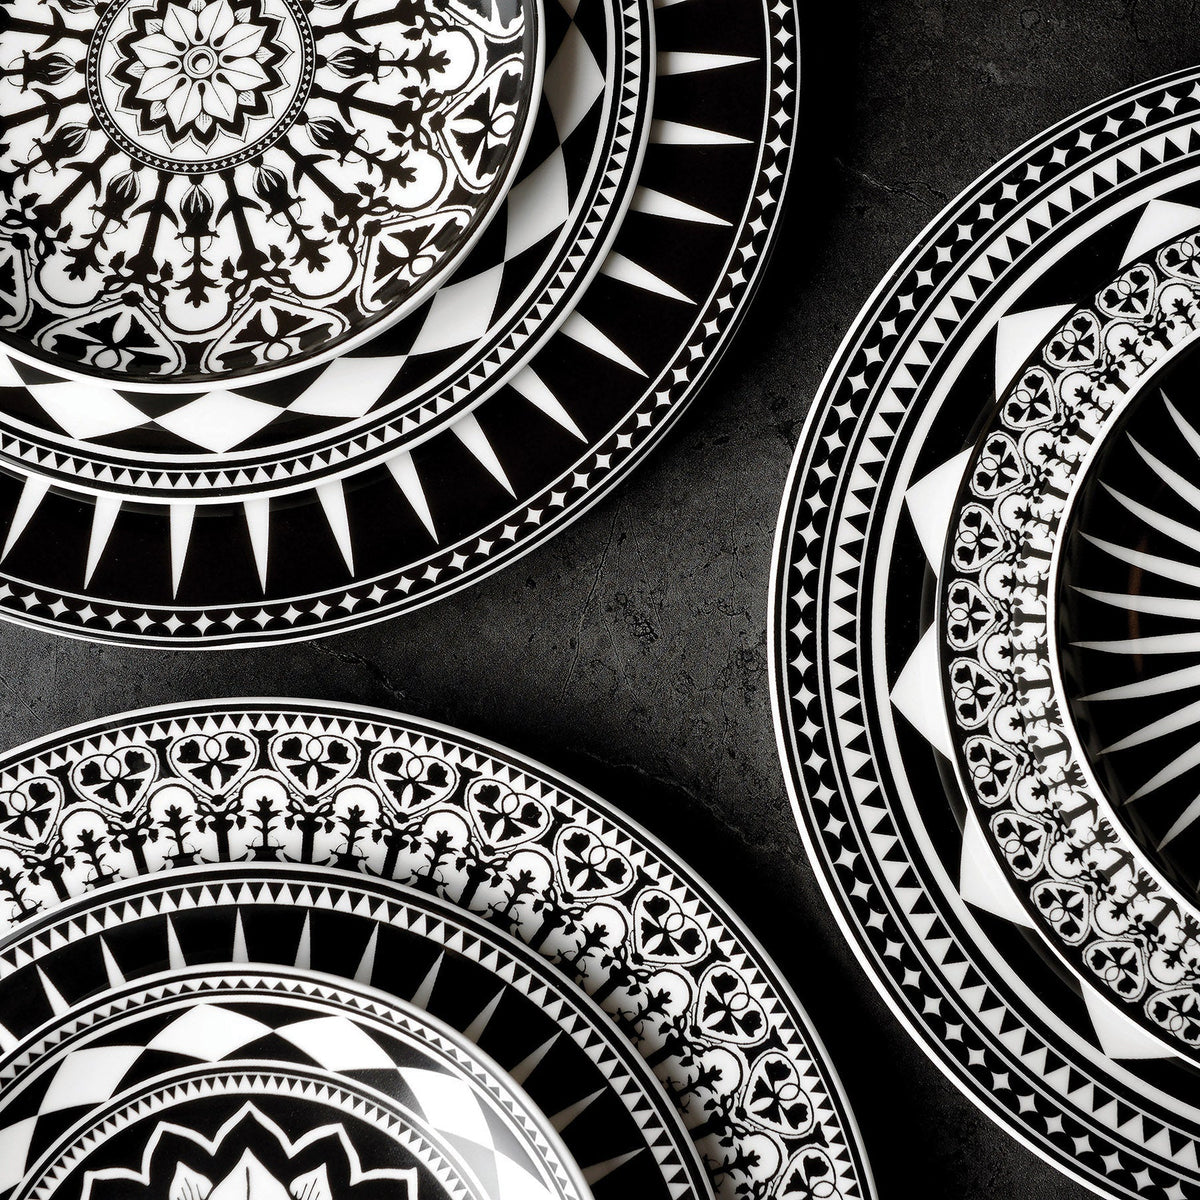 Caskata Artisanal Home&#39;s Casablanca Black Rimmed Dinner Plates feature elegant scrollwork designs.